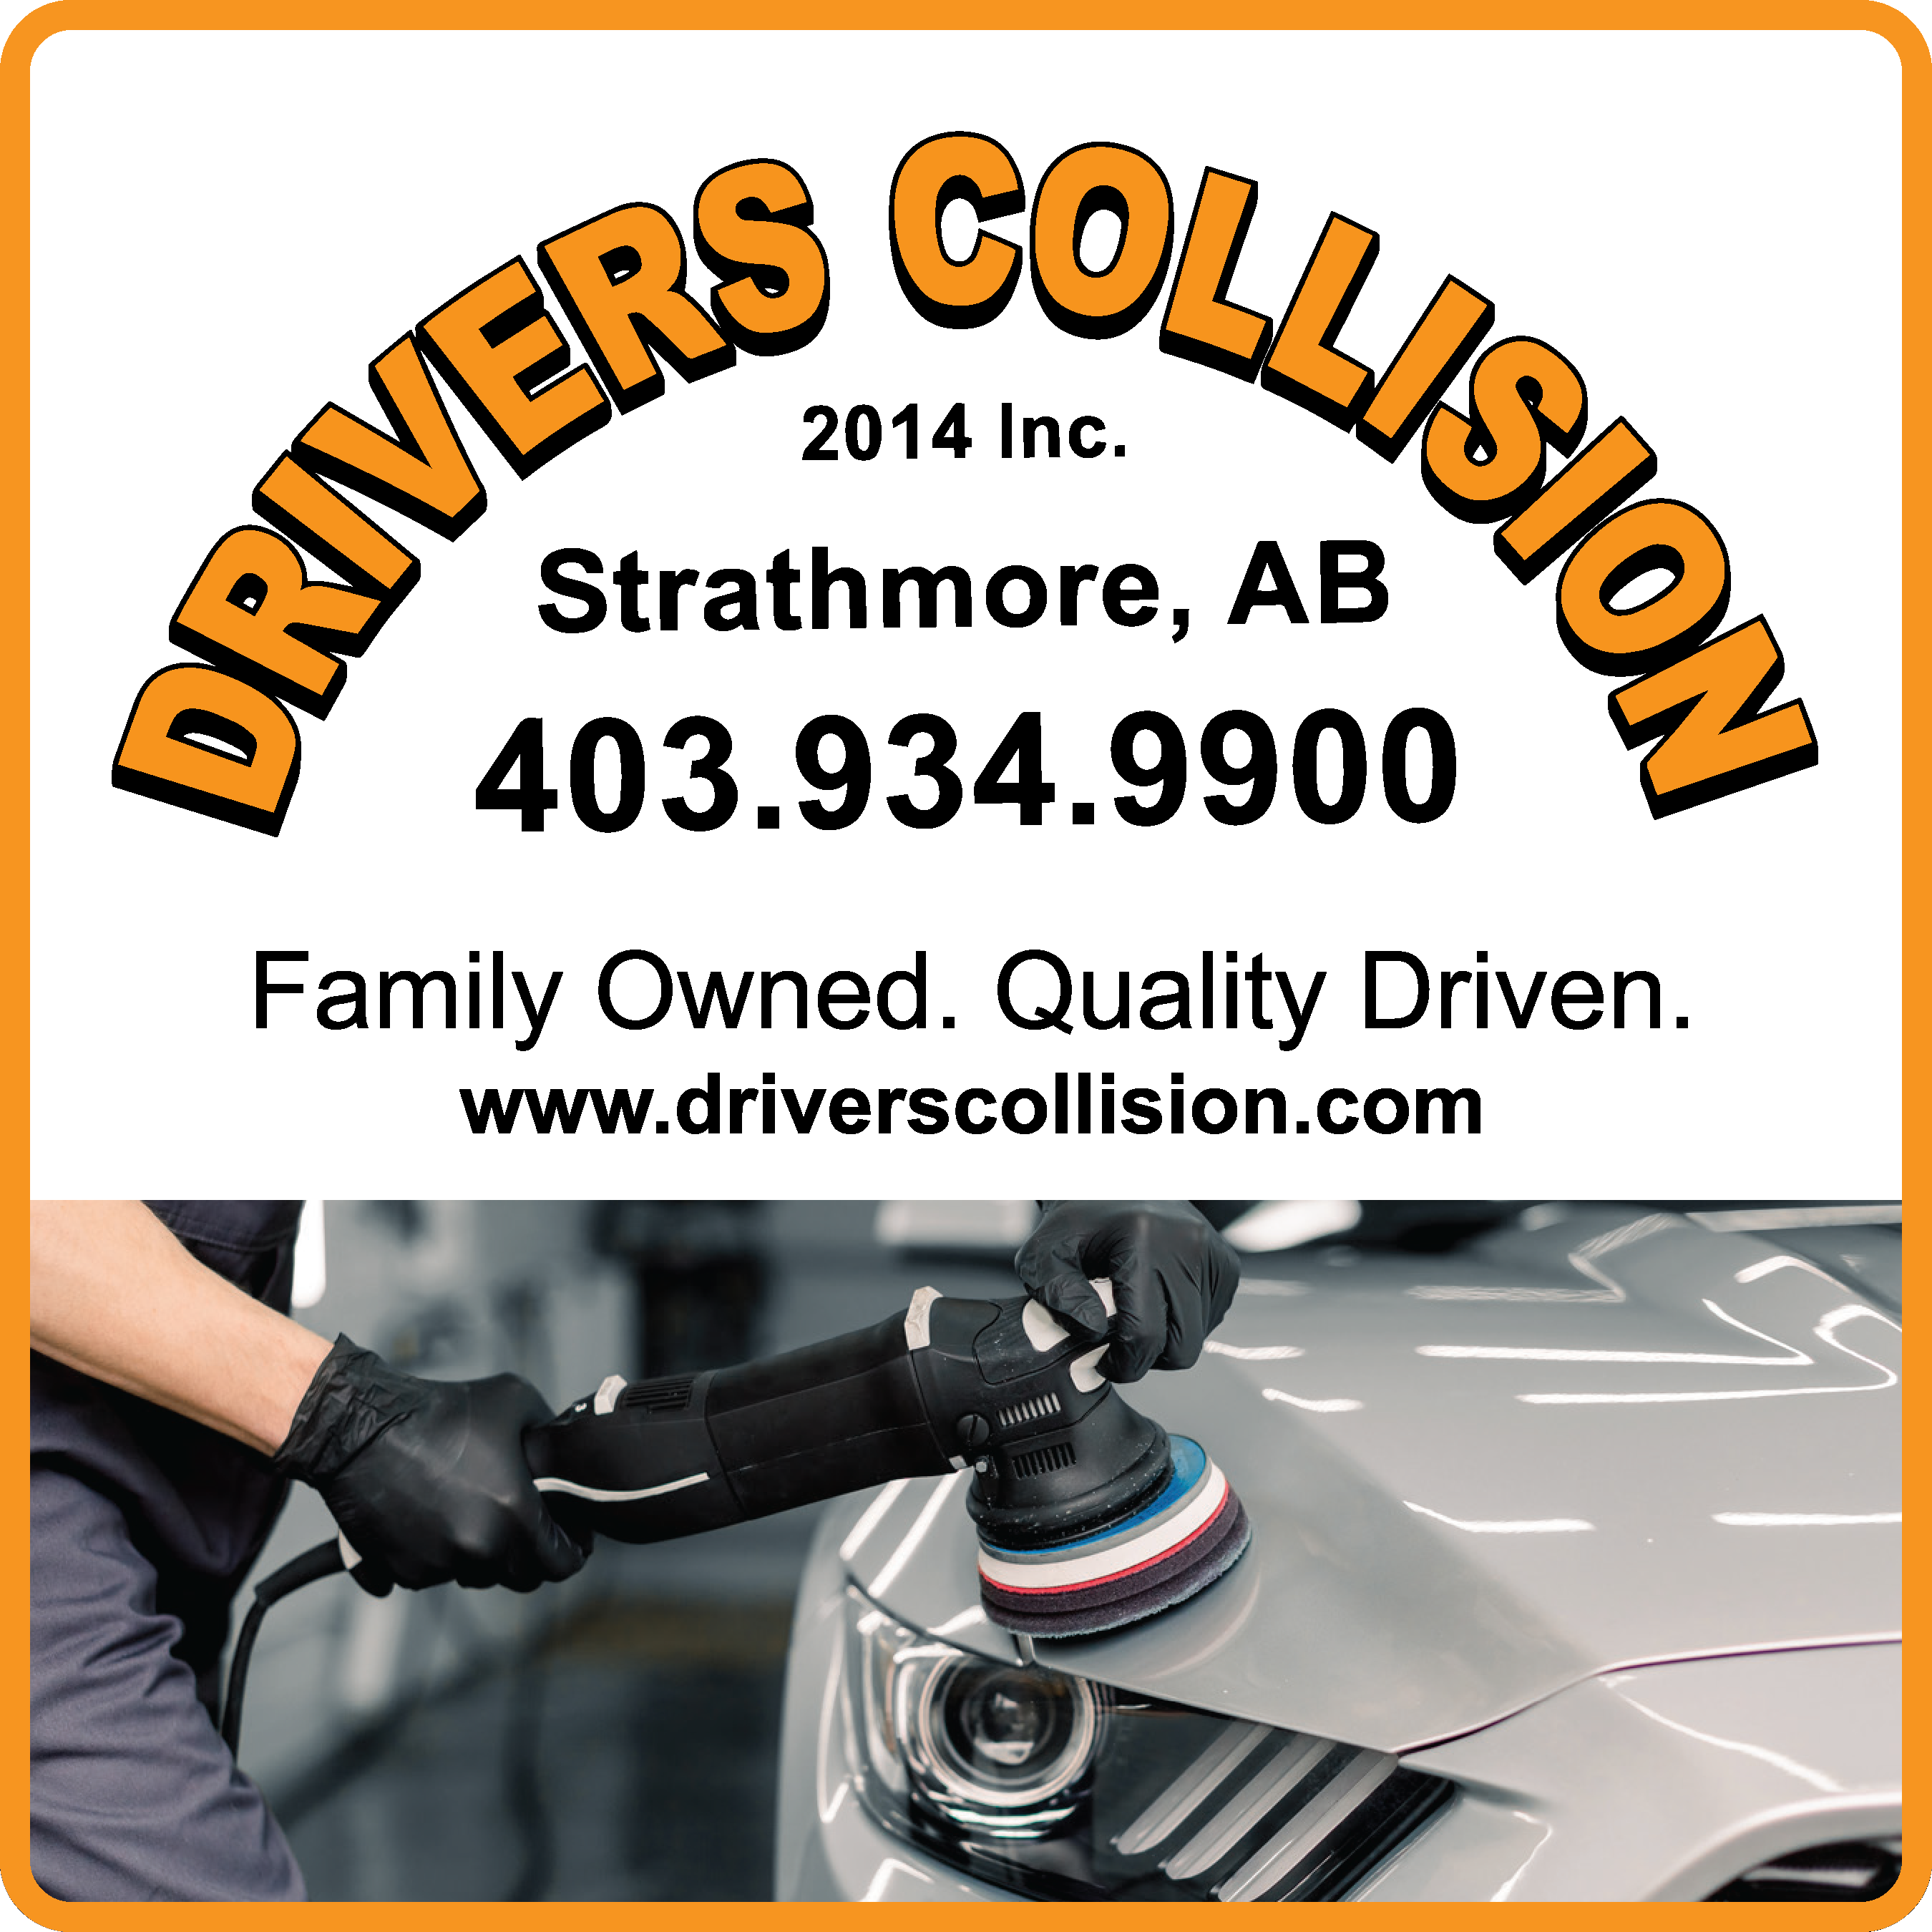 Drivers Collision 2014 Inc